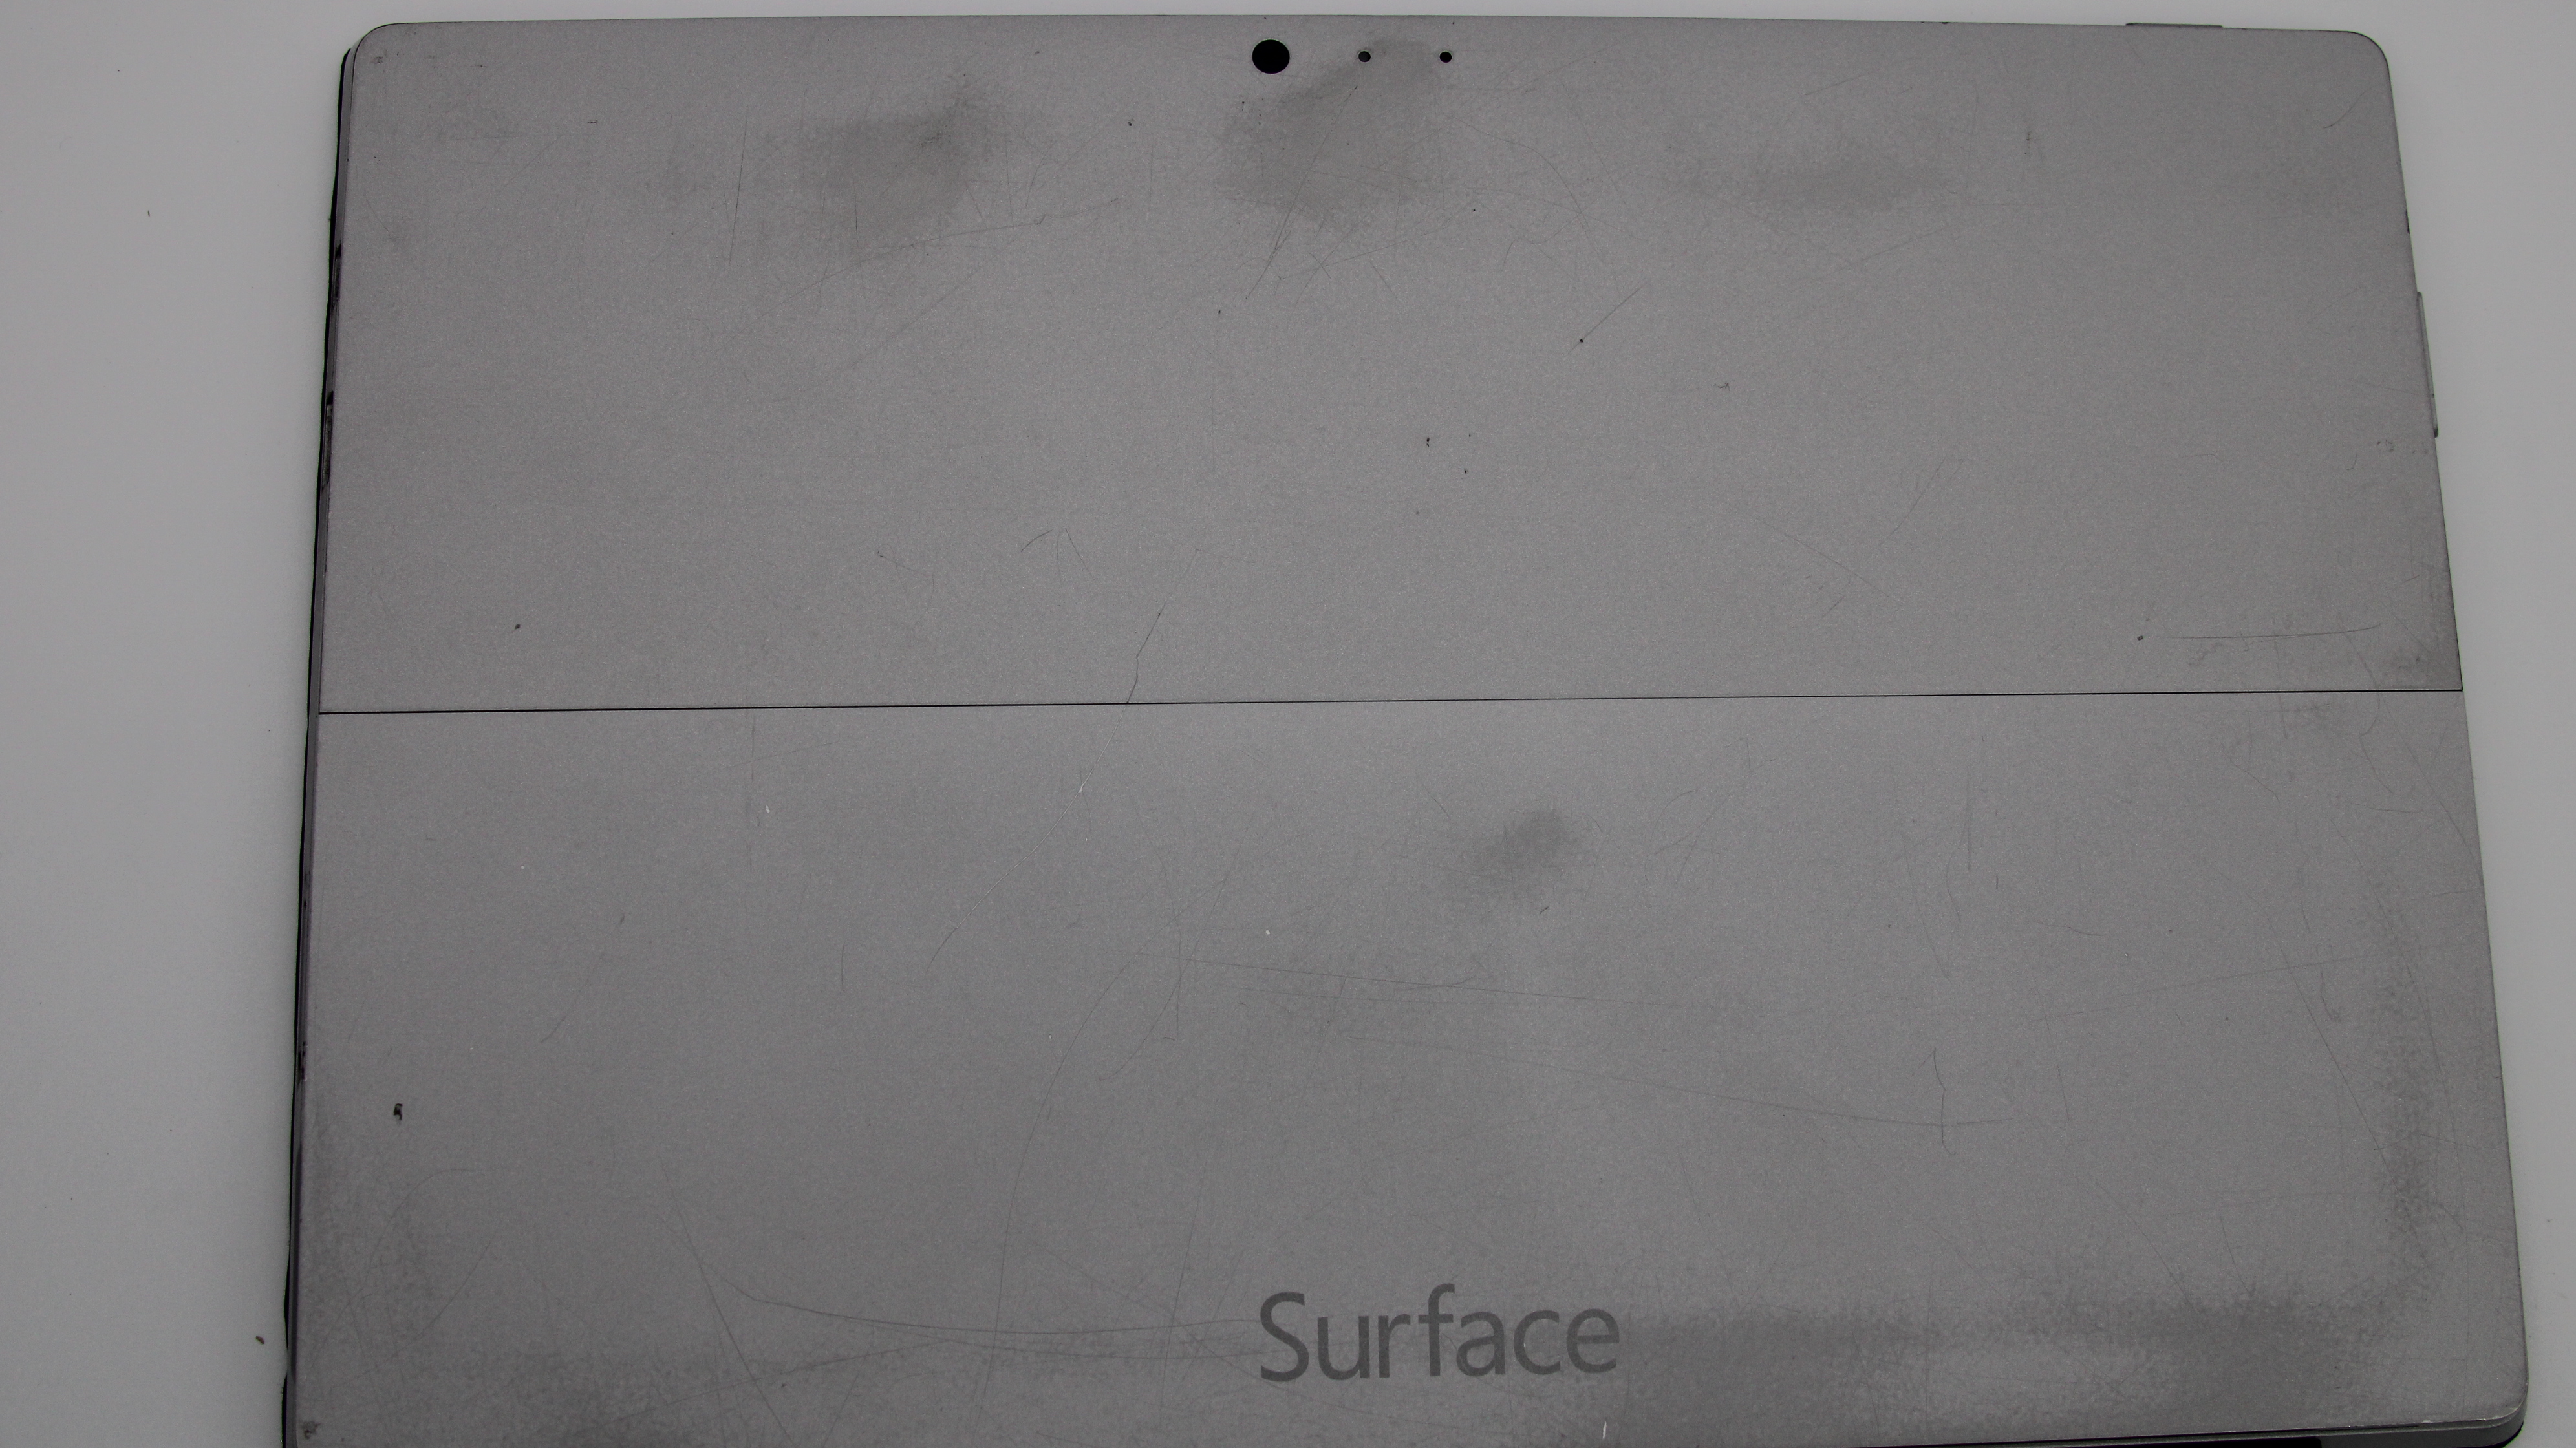 Microsoft Surface Pro 3 I3-4020Y 1.50GHz 4GB RAM 64GB HDD Win 10 Pro